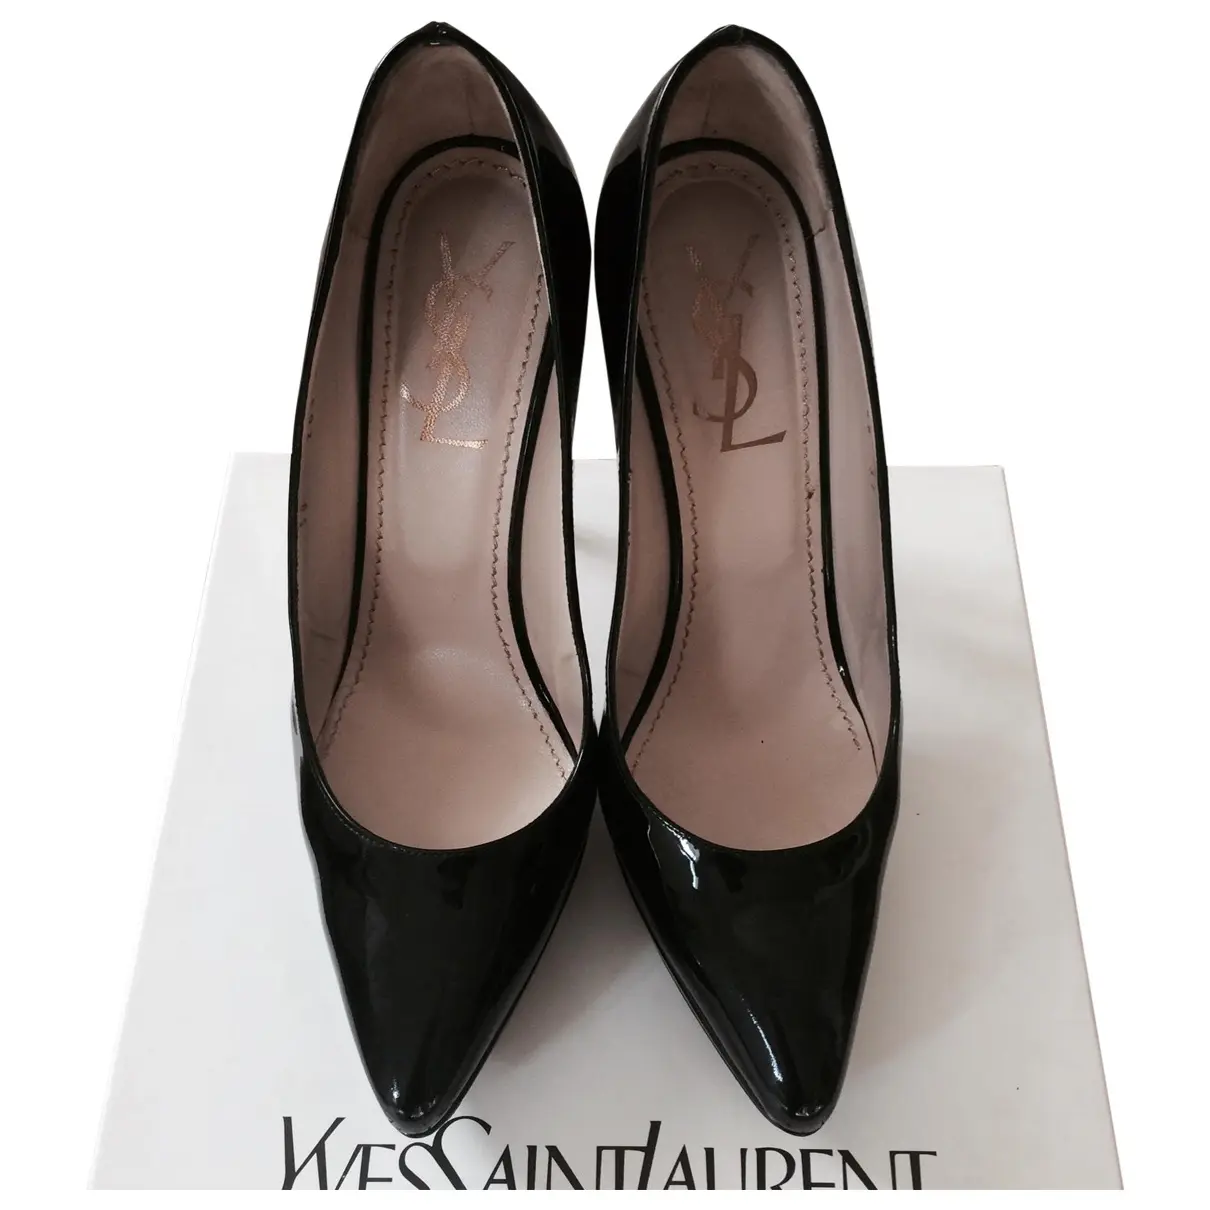 Yves Saint Laurent Patent leather heels for sale - Vintage